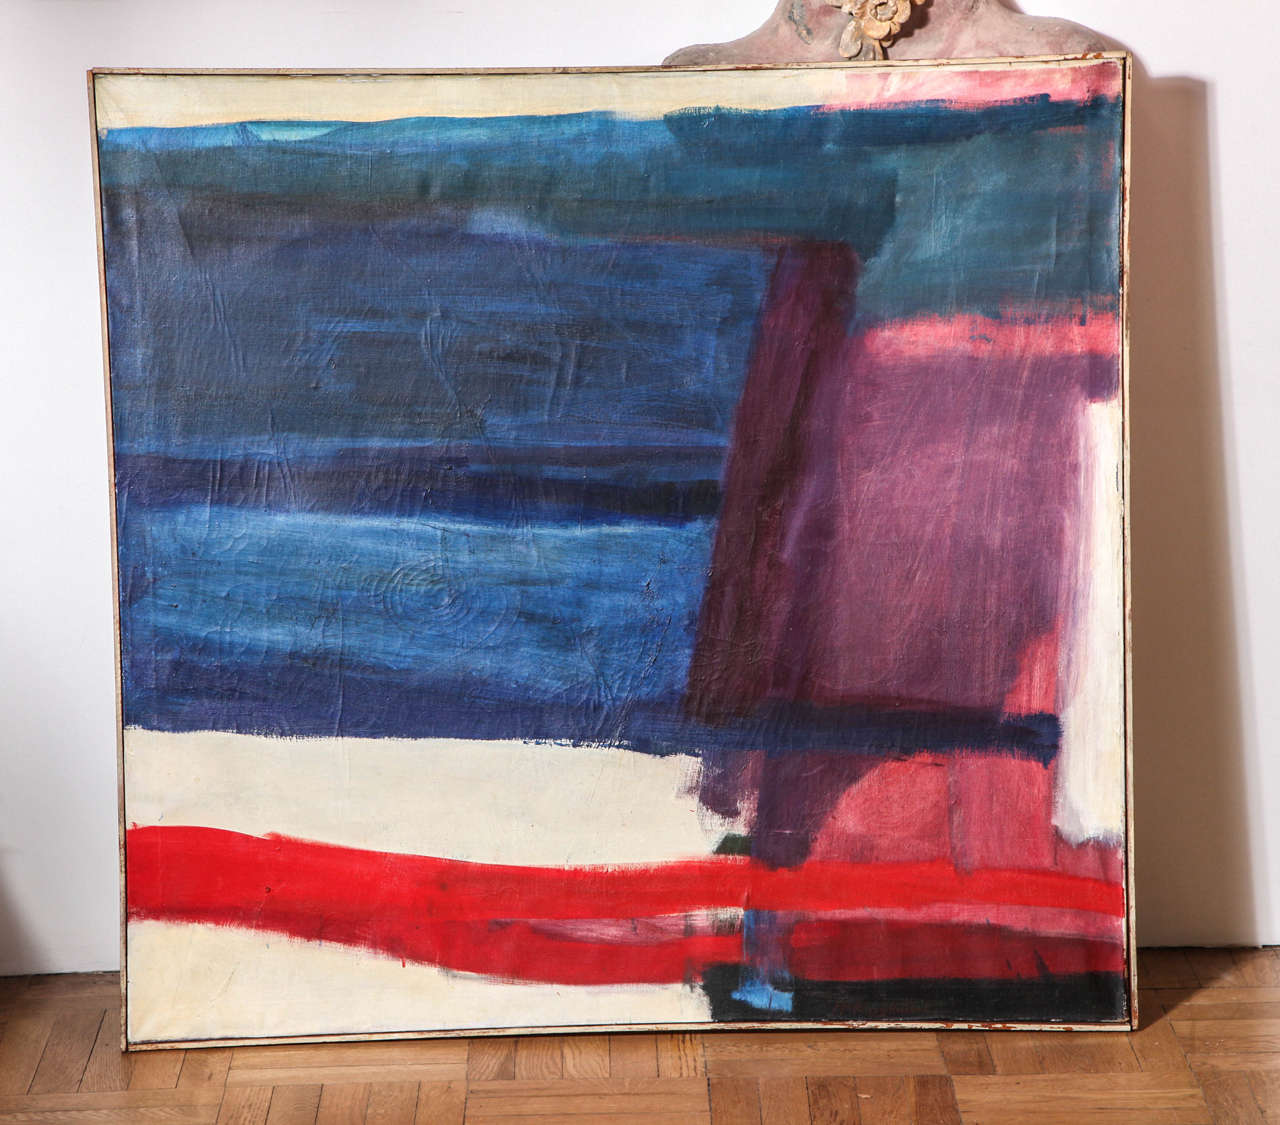 Oil on Canvas signed Helene McKinsey Herzbrun (1922-1984) Untitled
46.5 x 48.5